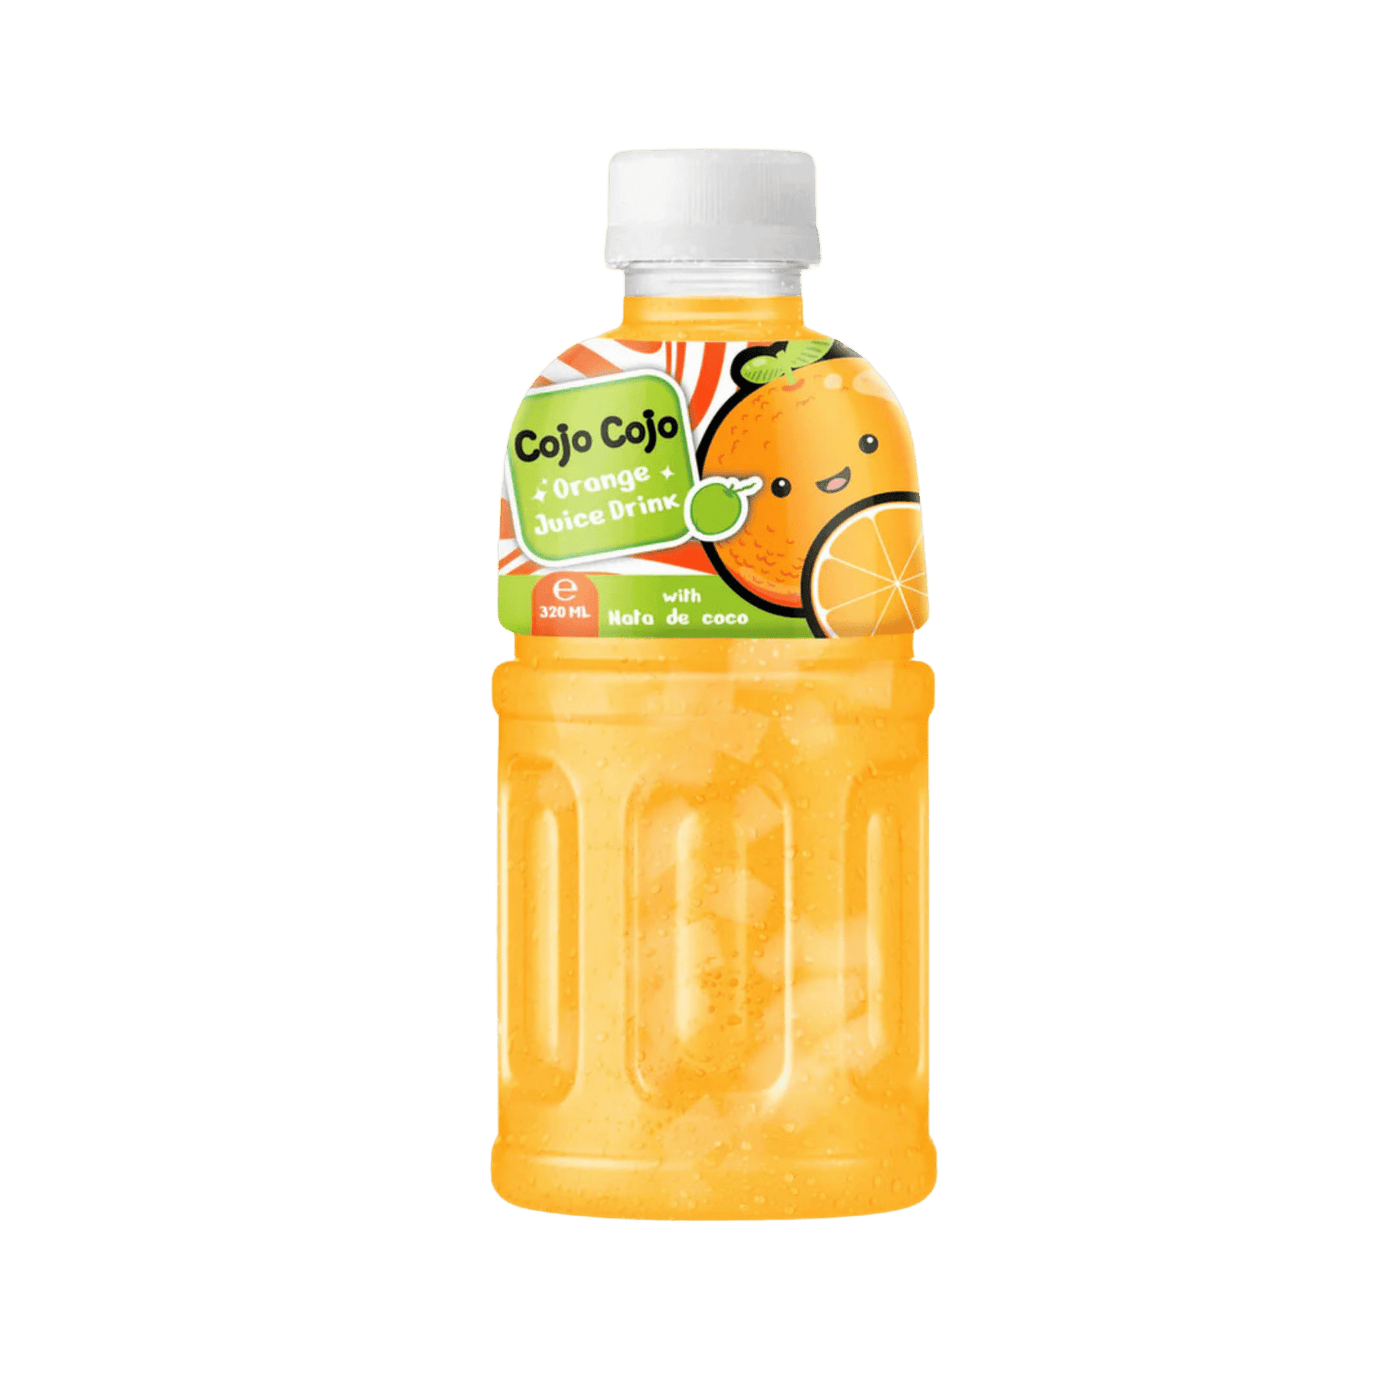 Cojo Cojo - Juice drink - Thailand